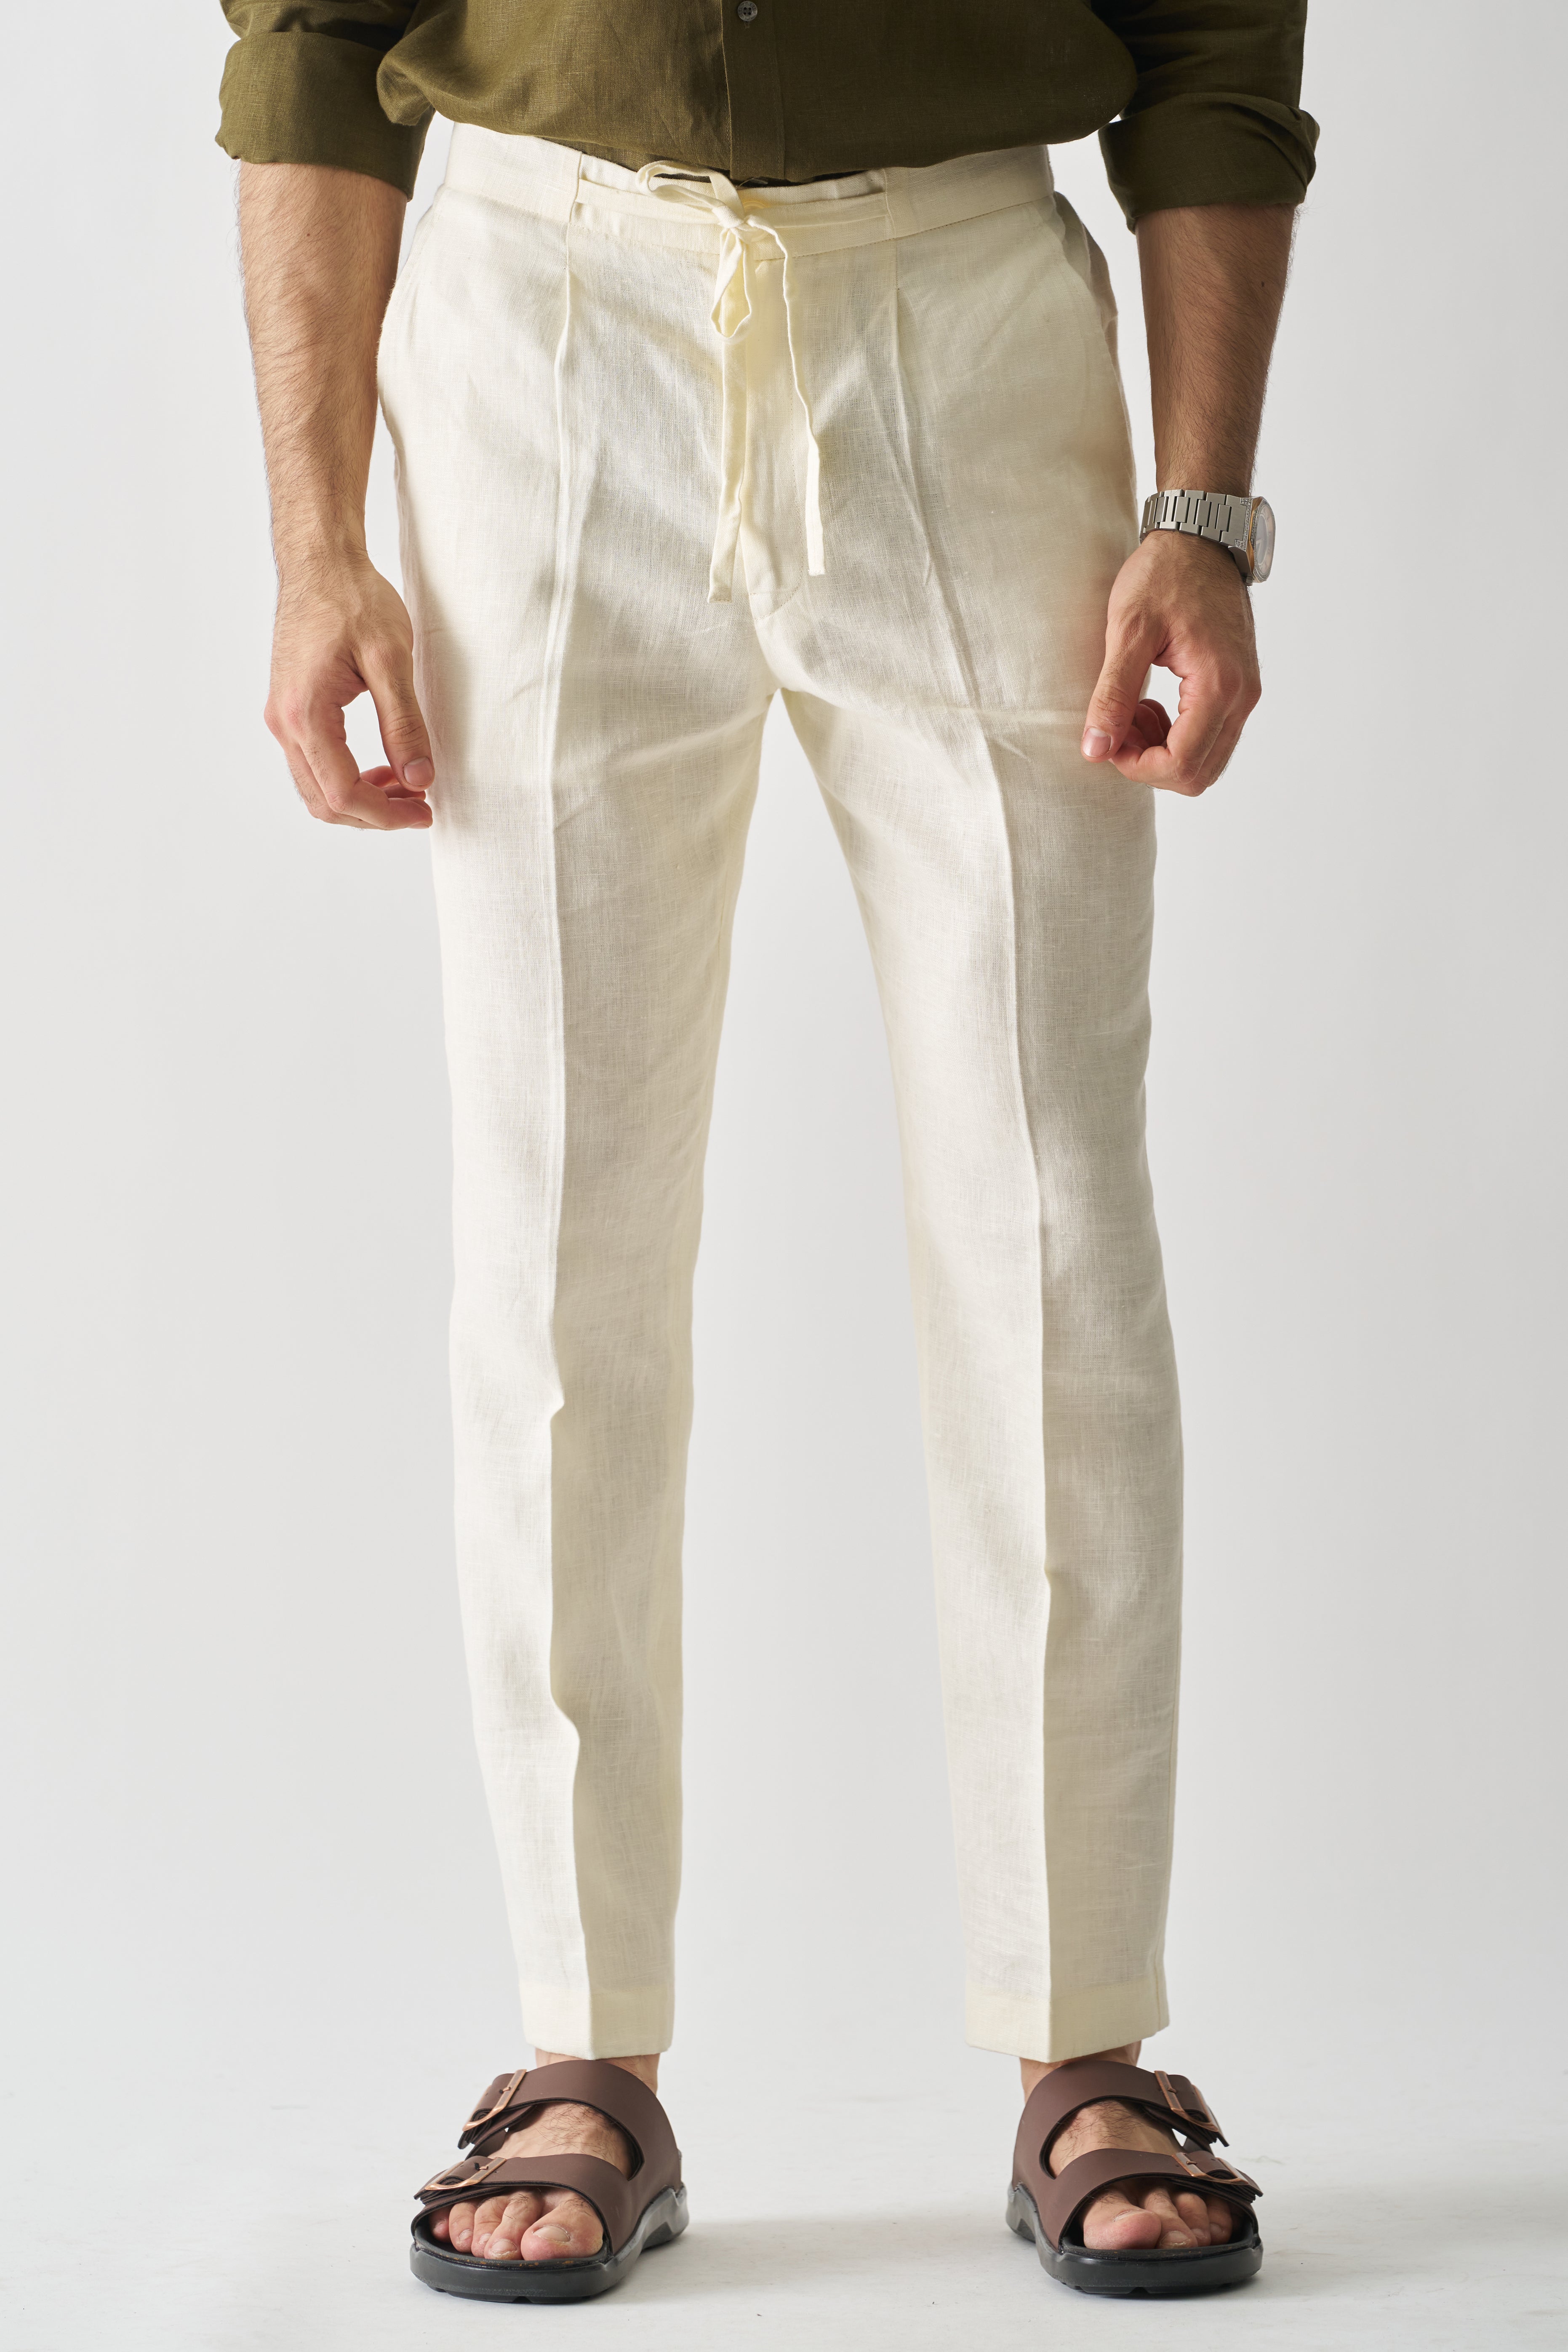 MERC - (P3110) - 100% Pure Linen Pants - Penners